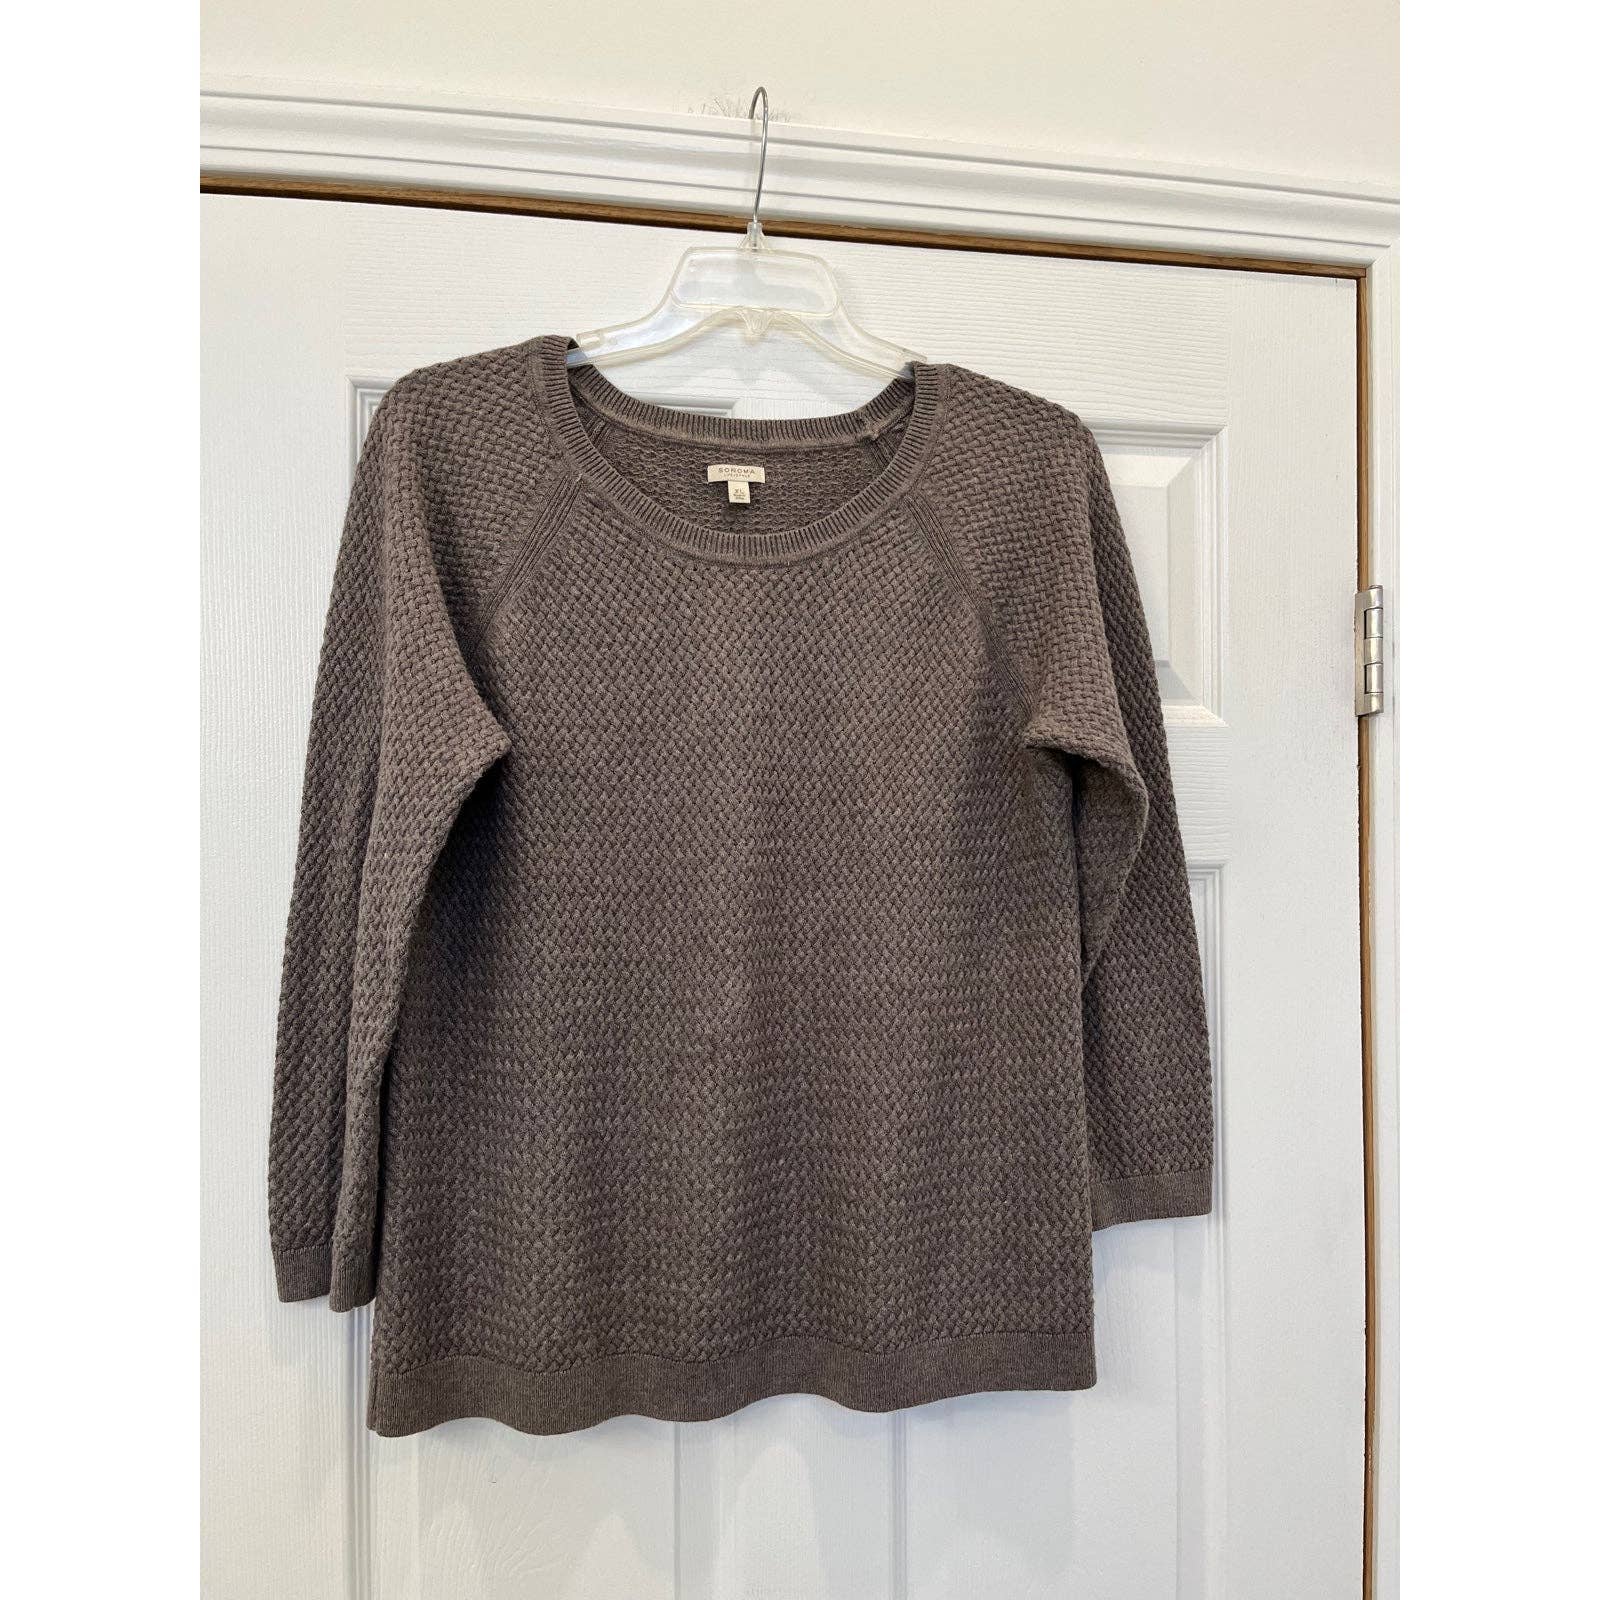 big discount Gorgeous Women’s Brown Sonoma Sweater Size L P0Mprv5y9 hot sale